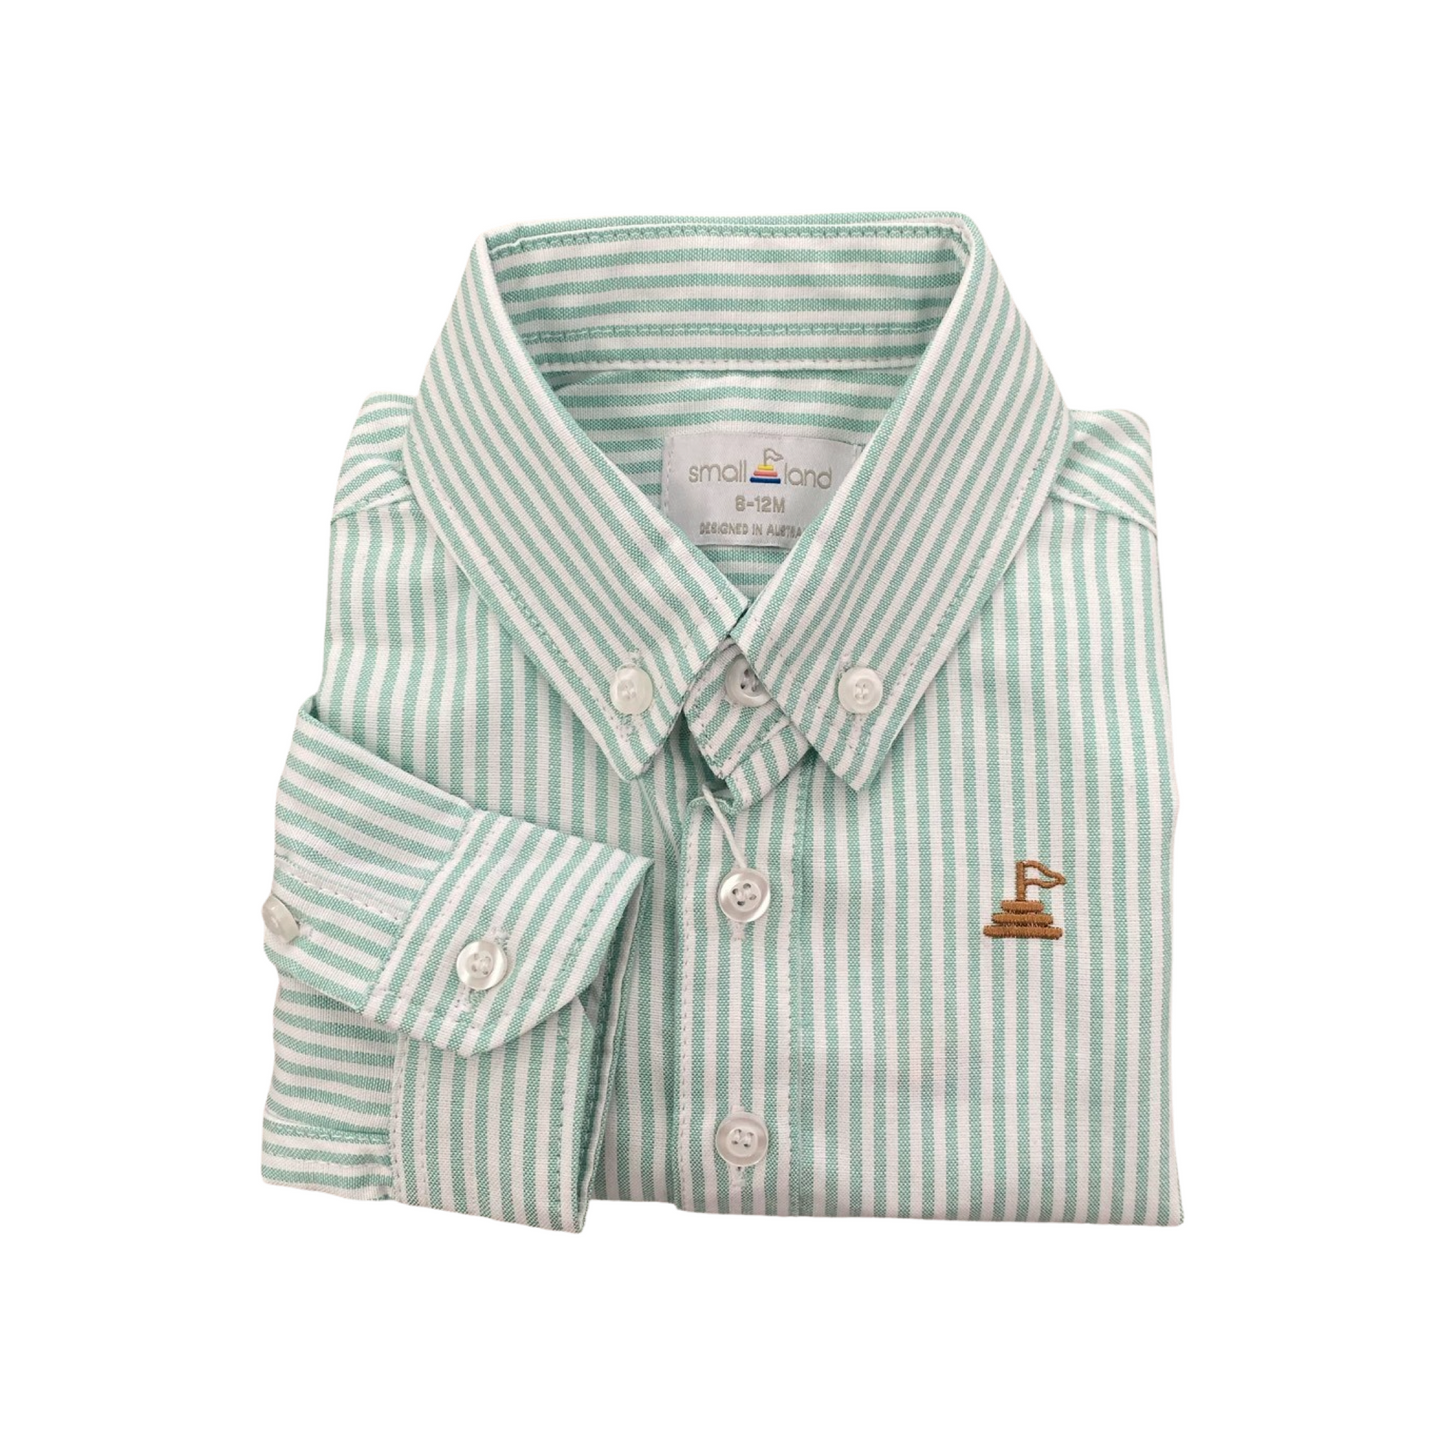 Boys button up pinstripe shirt - Green/White